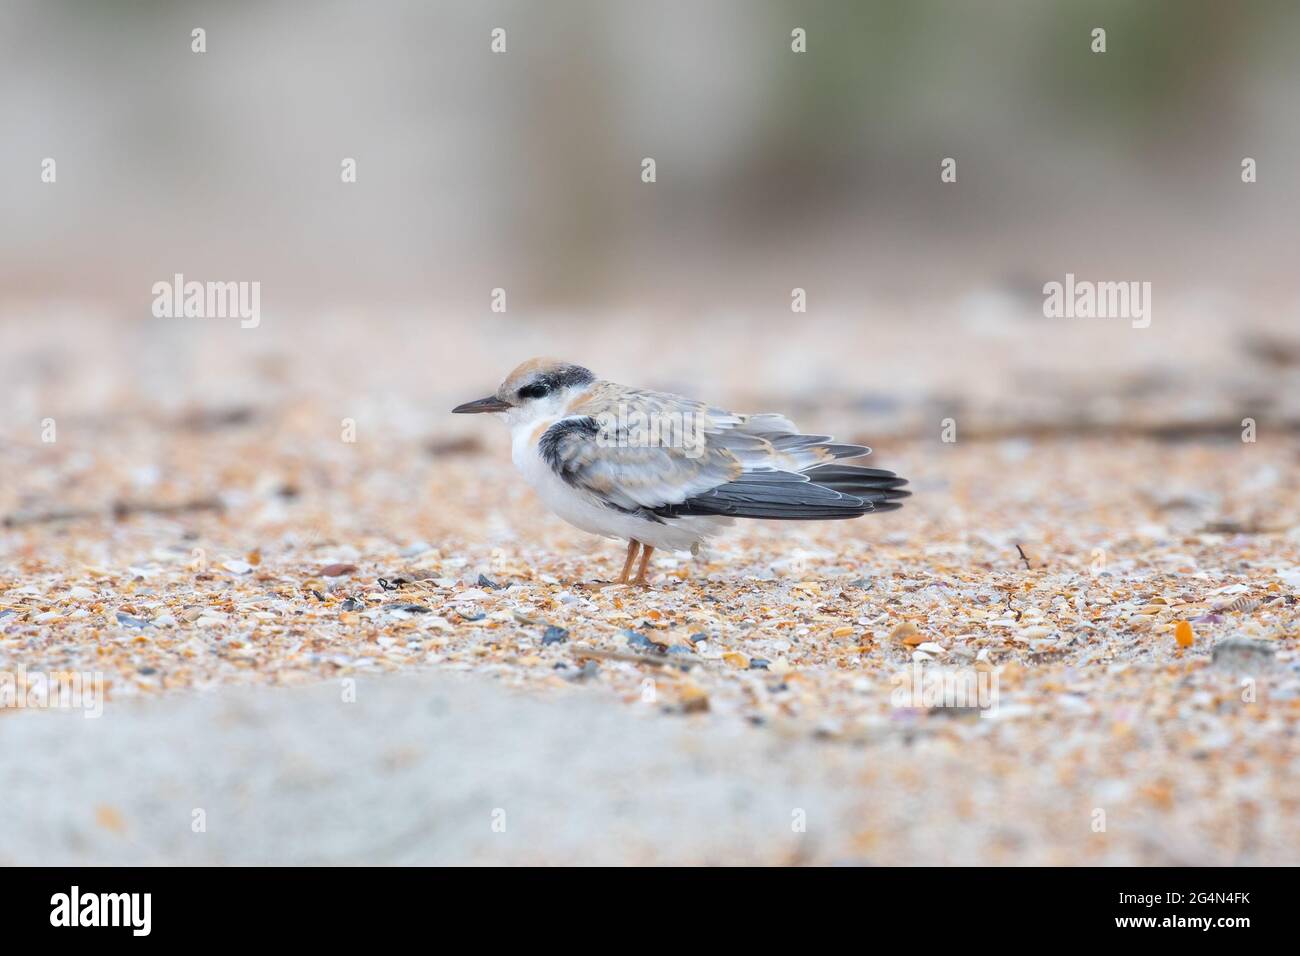 A least tern (Sternula antillarum) chick on the beach. Stock Photo